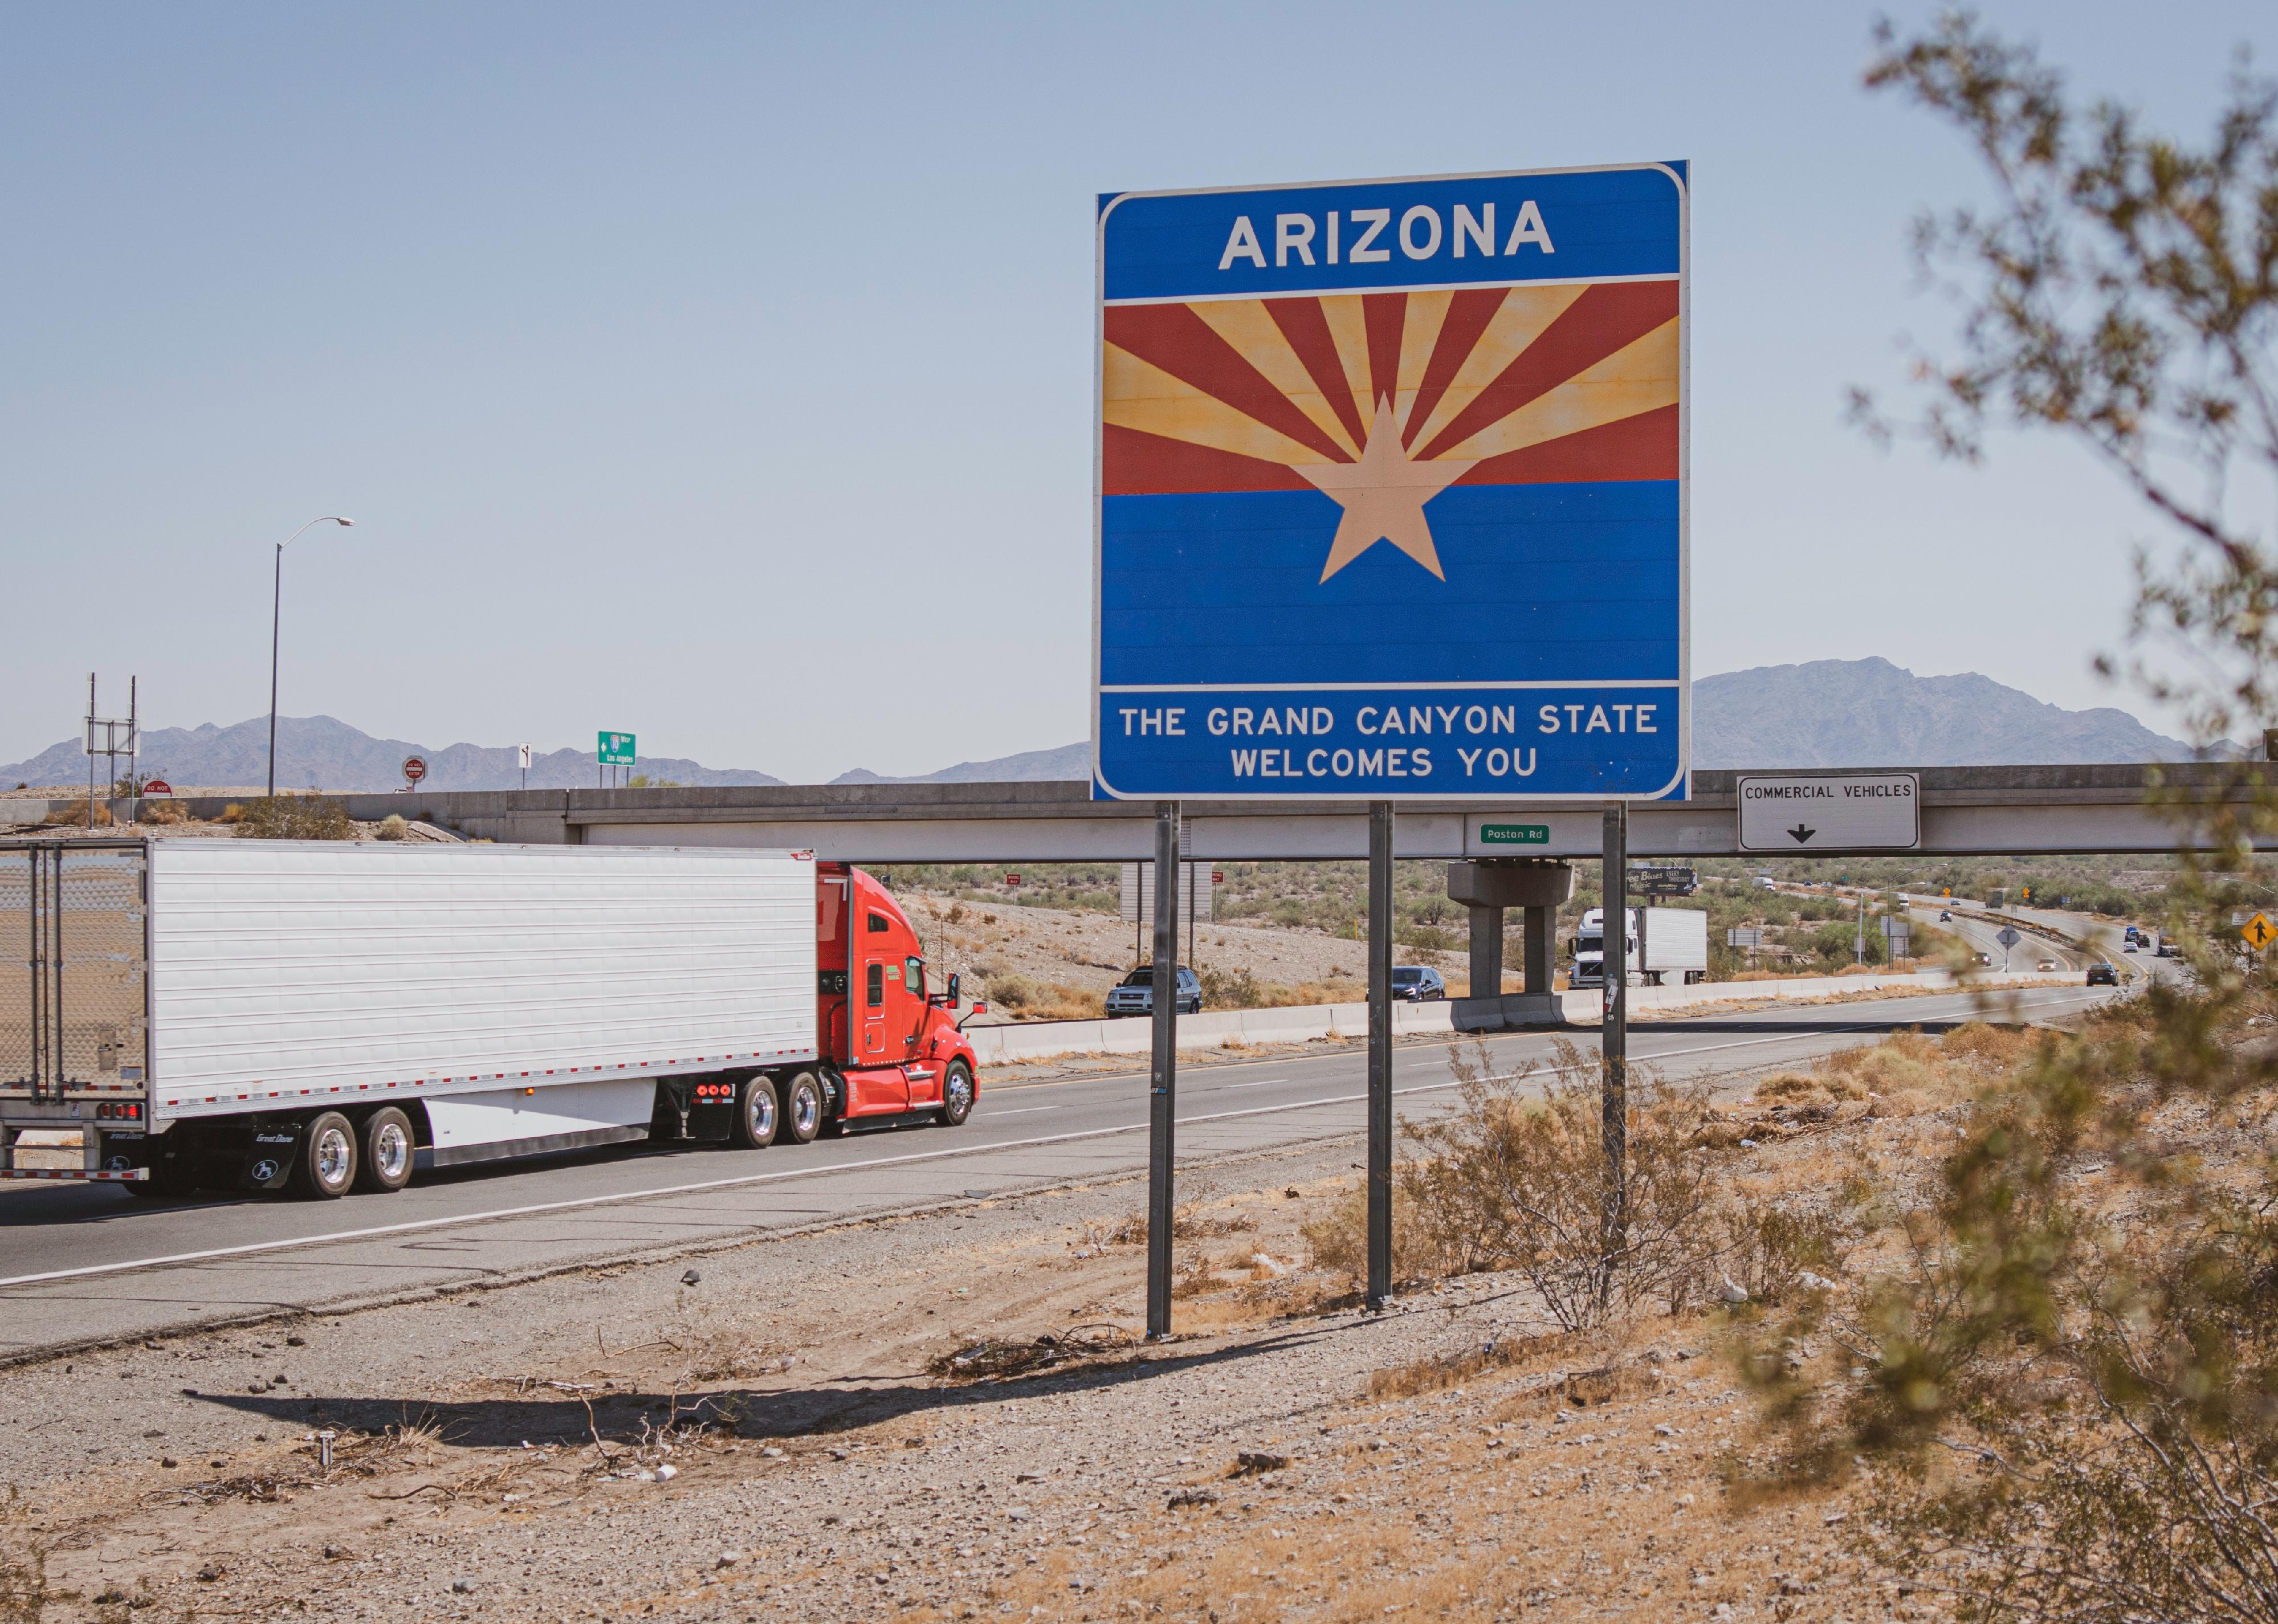 Welcome to Arizona interstate highway sign